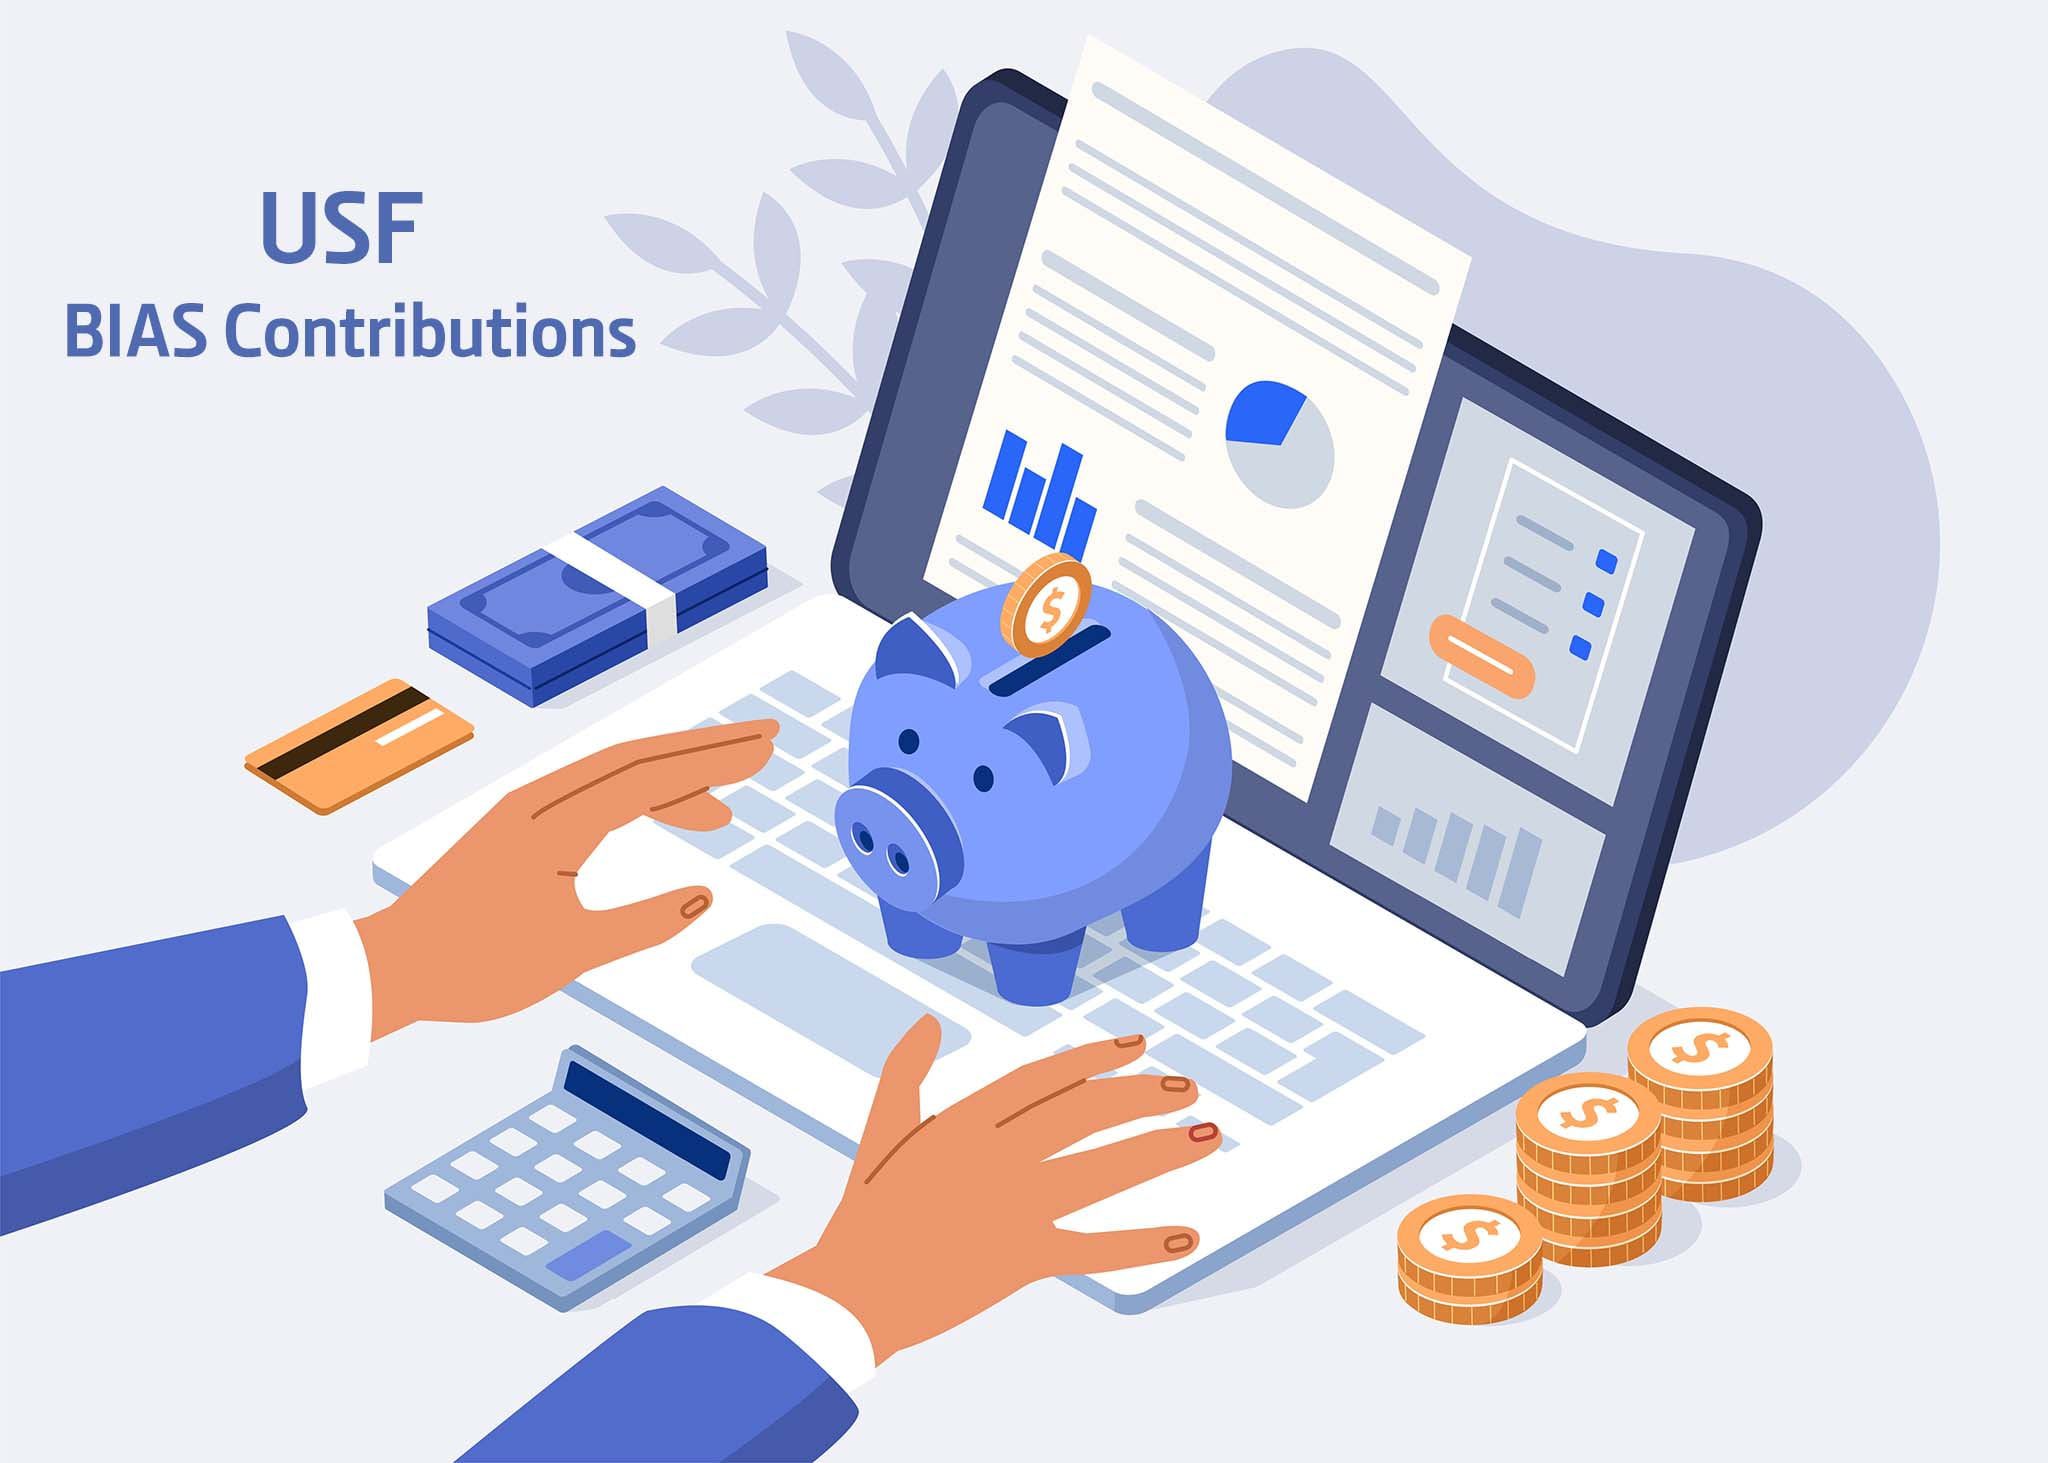 USF BIAS Contributions